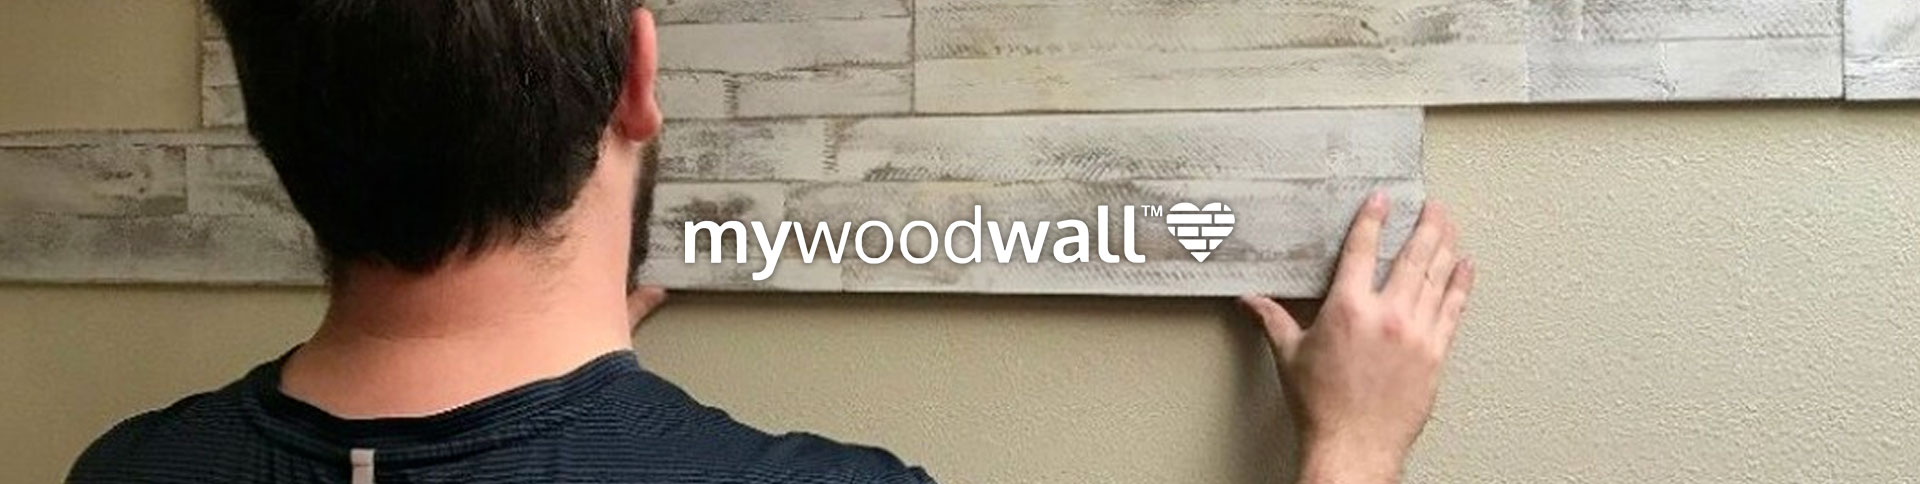 MyWoodWall - drevené obkladové panely